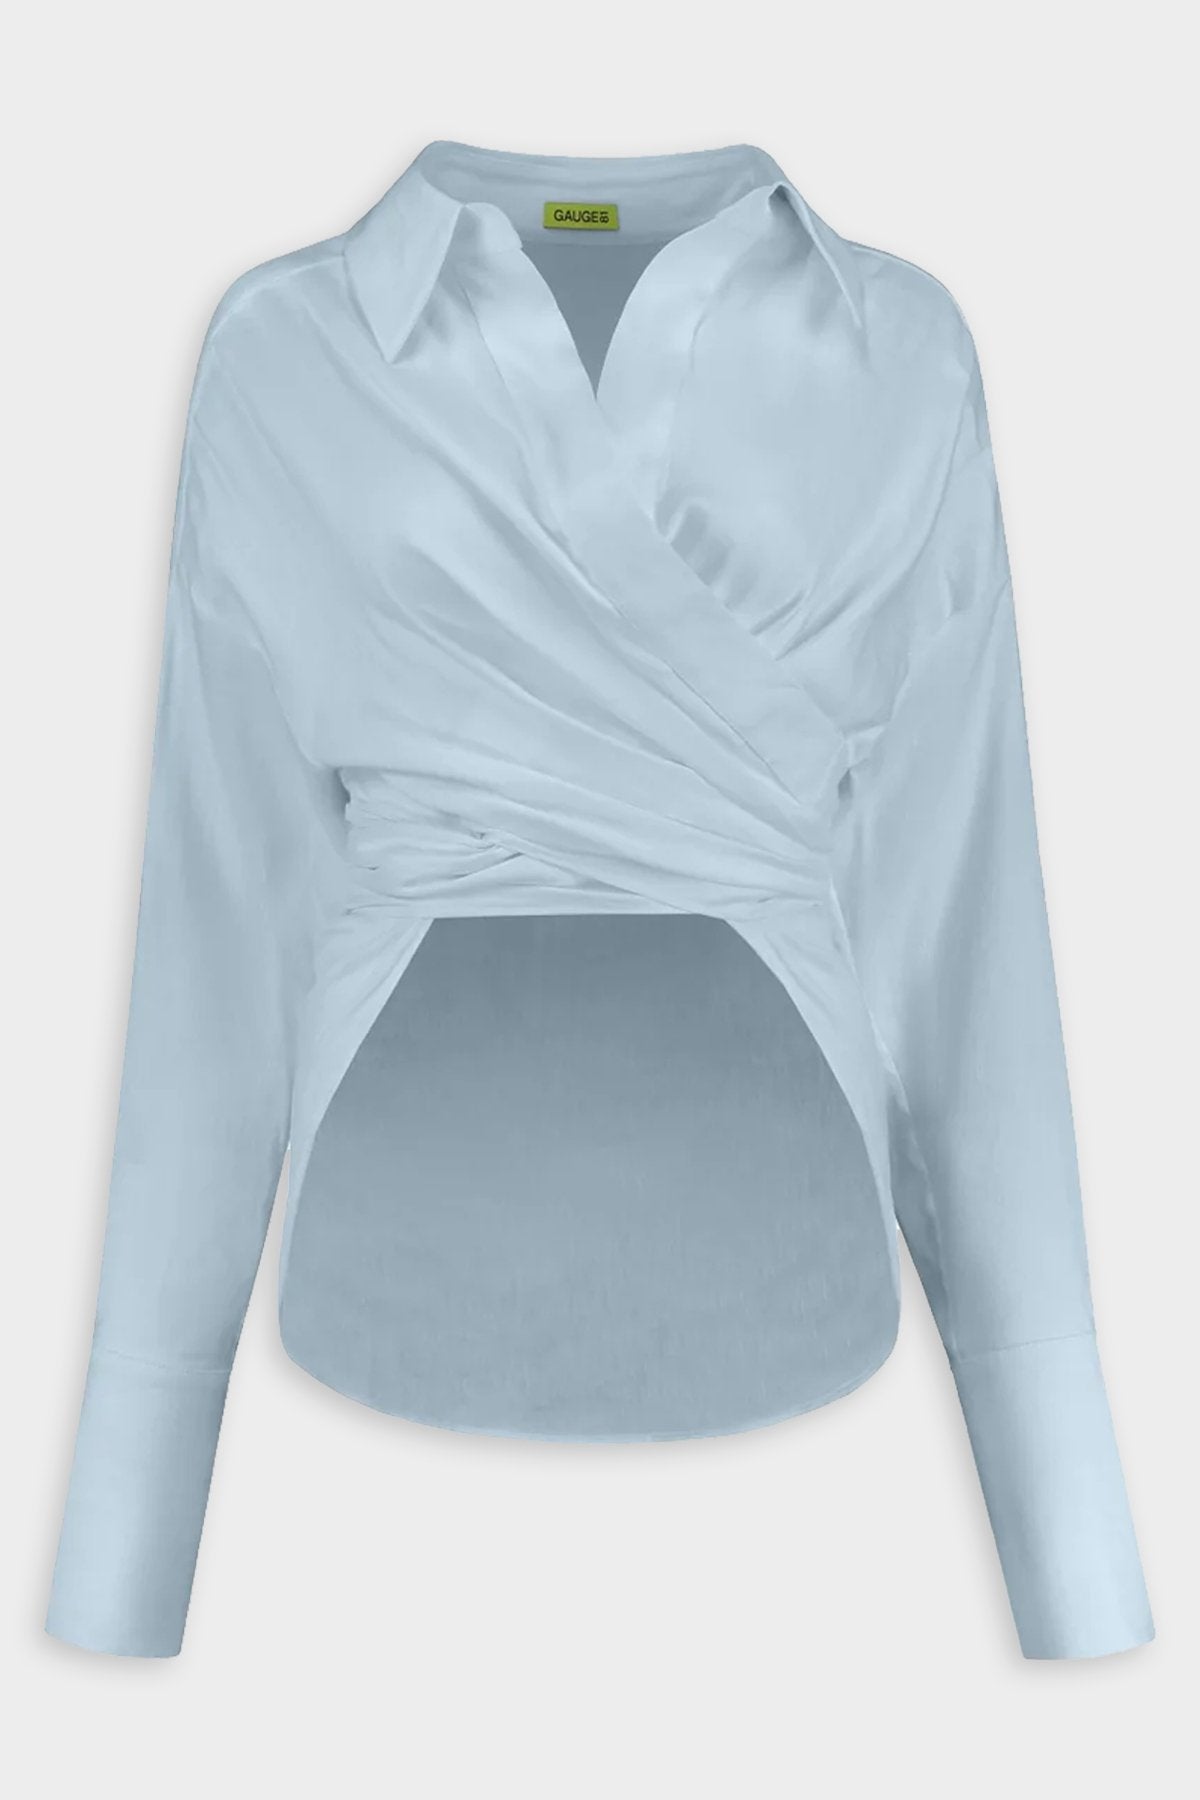 Sabinas Knit Shirt in Steel Grey - shop-olivia.com